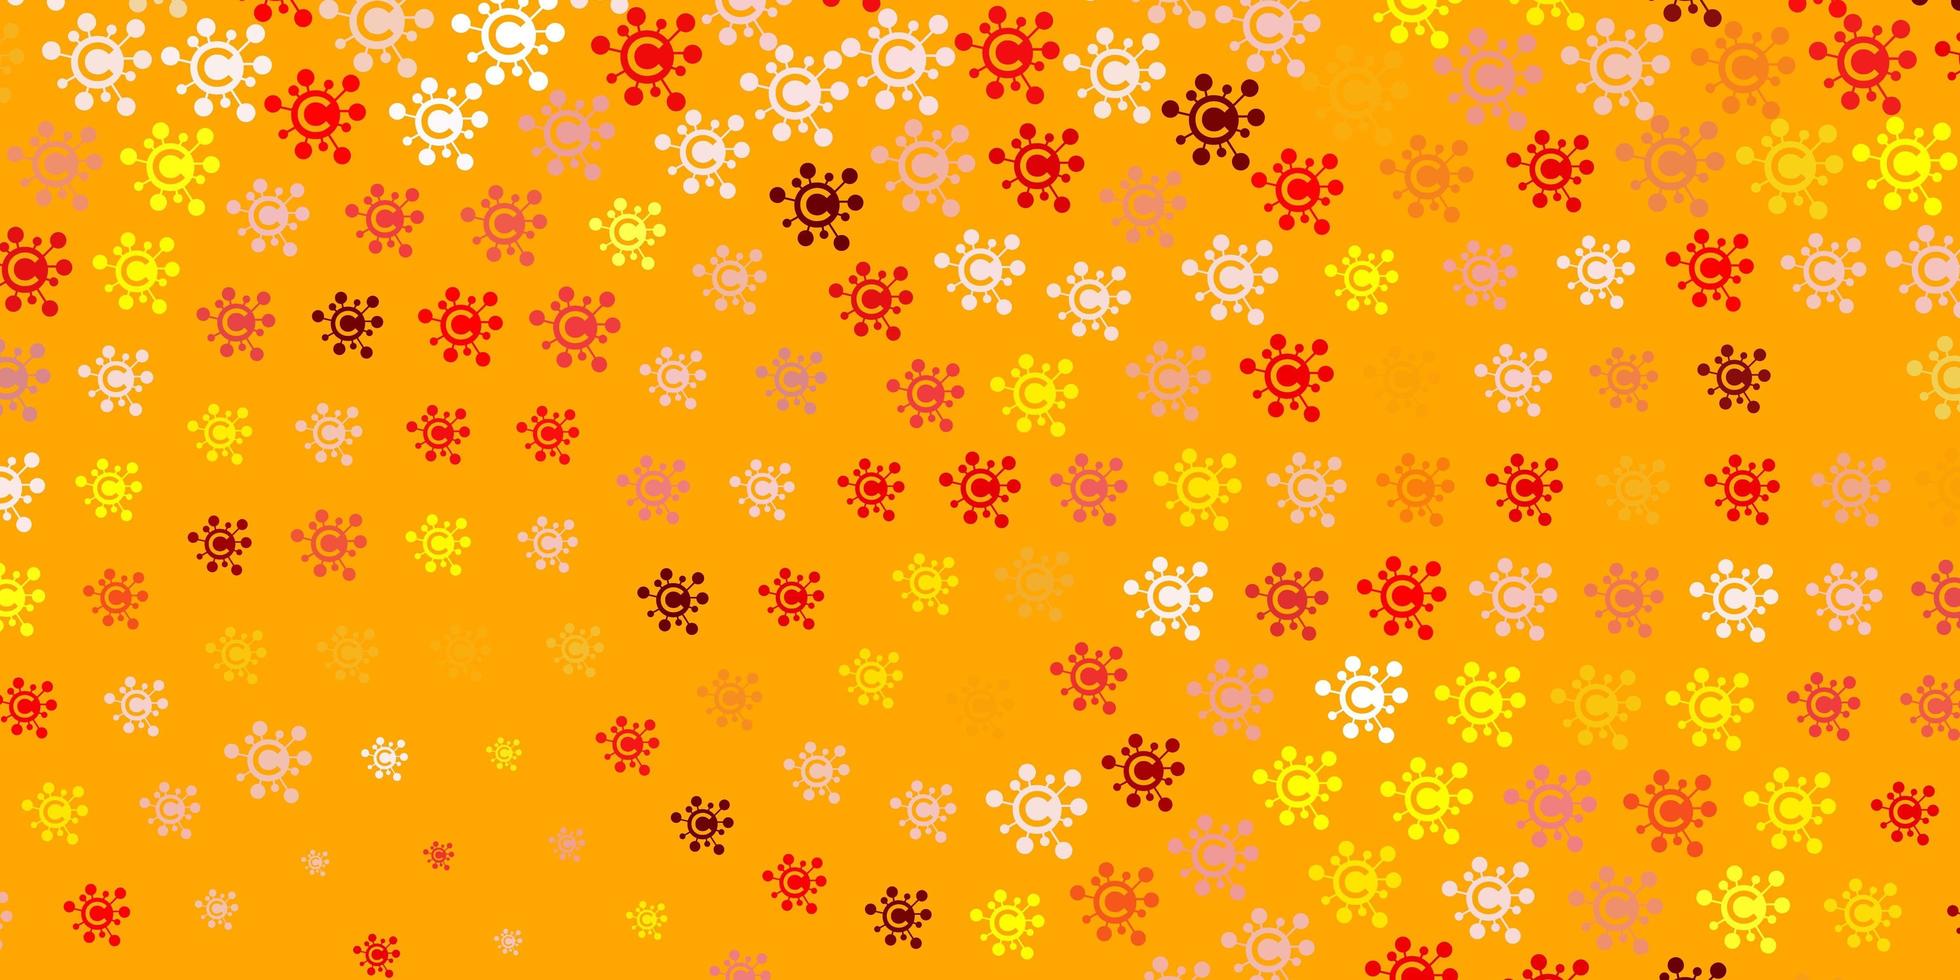 Light Red, Yellow vector pattern with coronavirus elements.